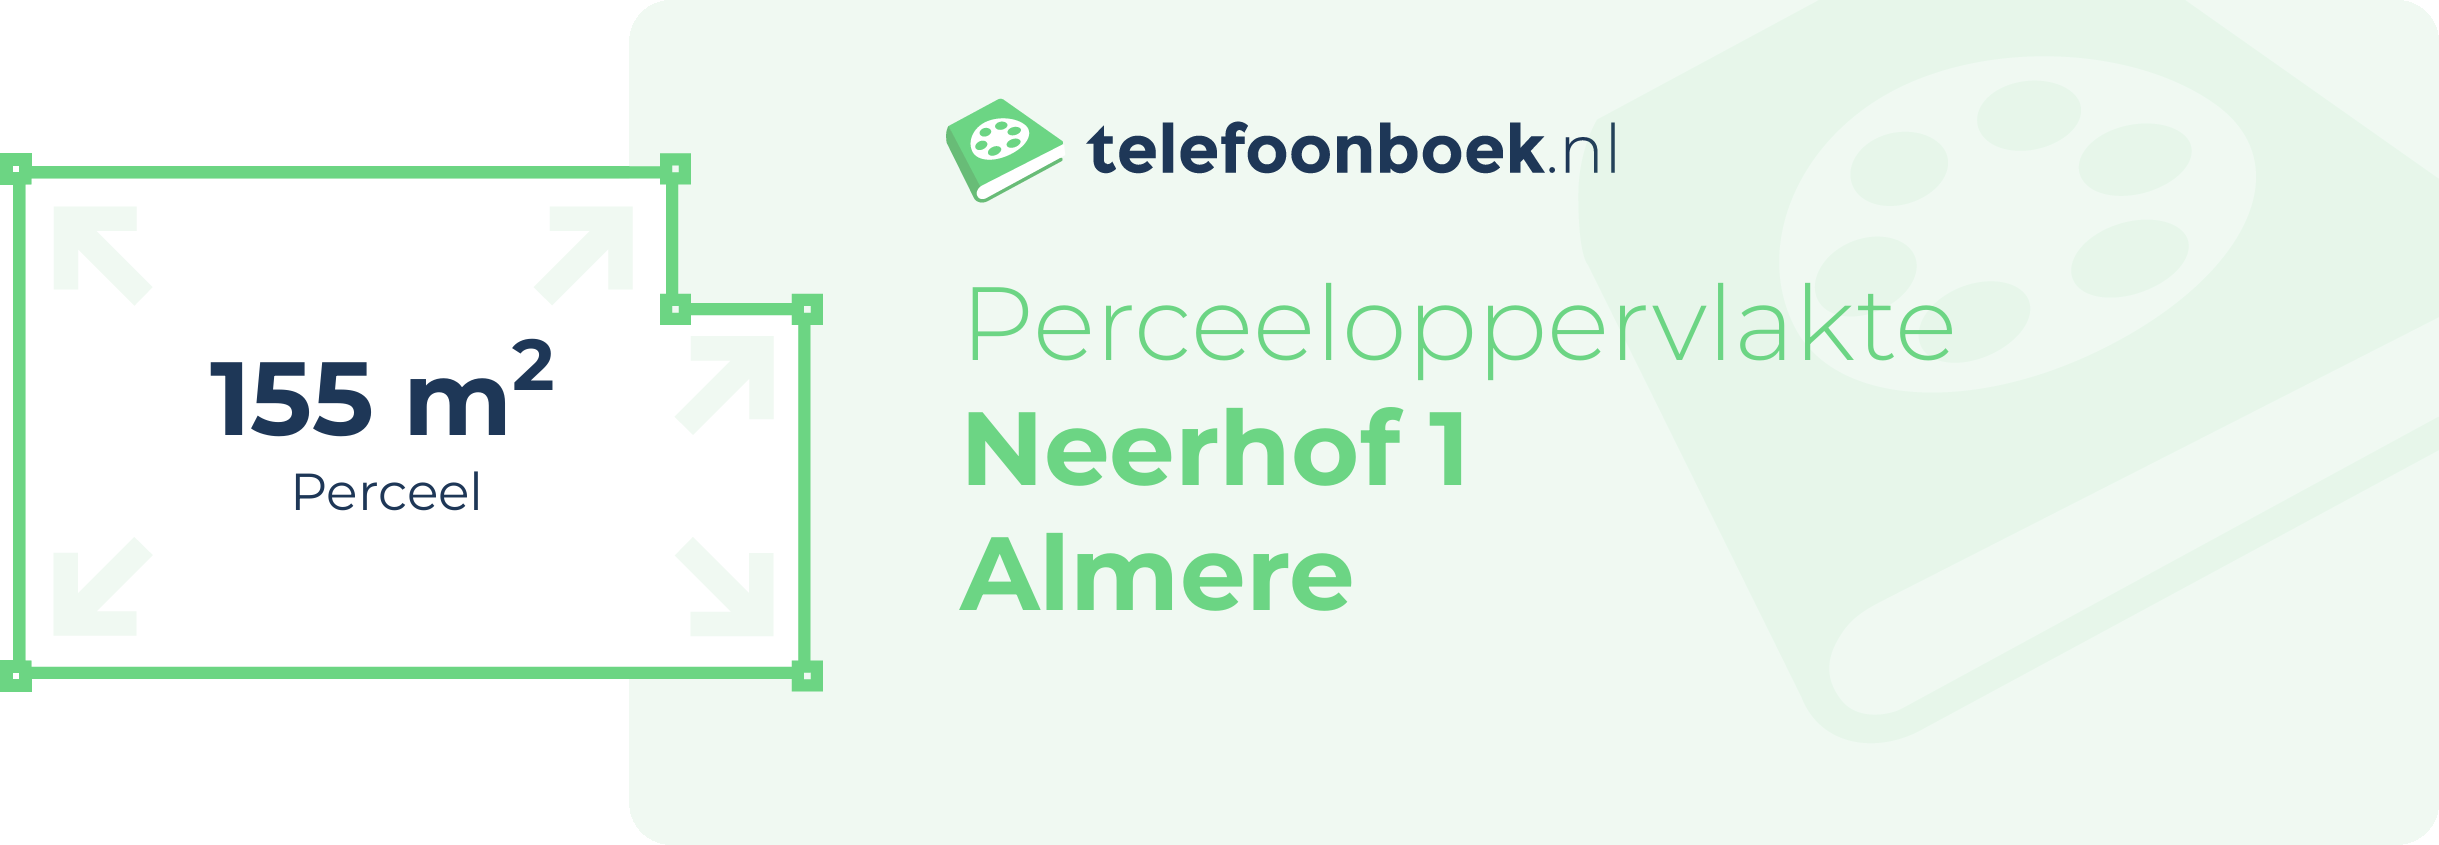 Perceeloppervlakte Neerhof 1 Almere